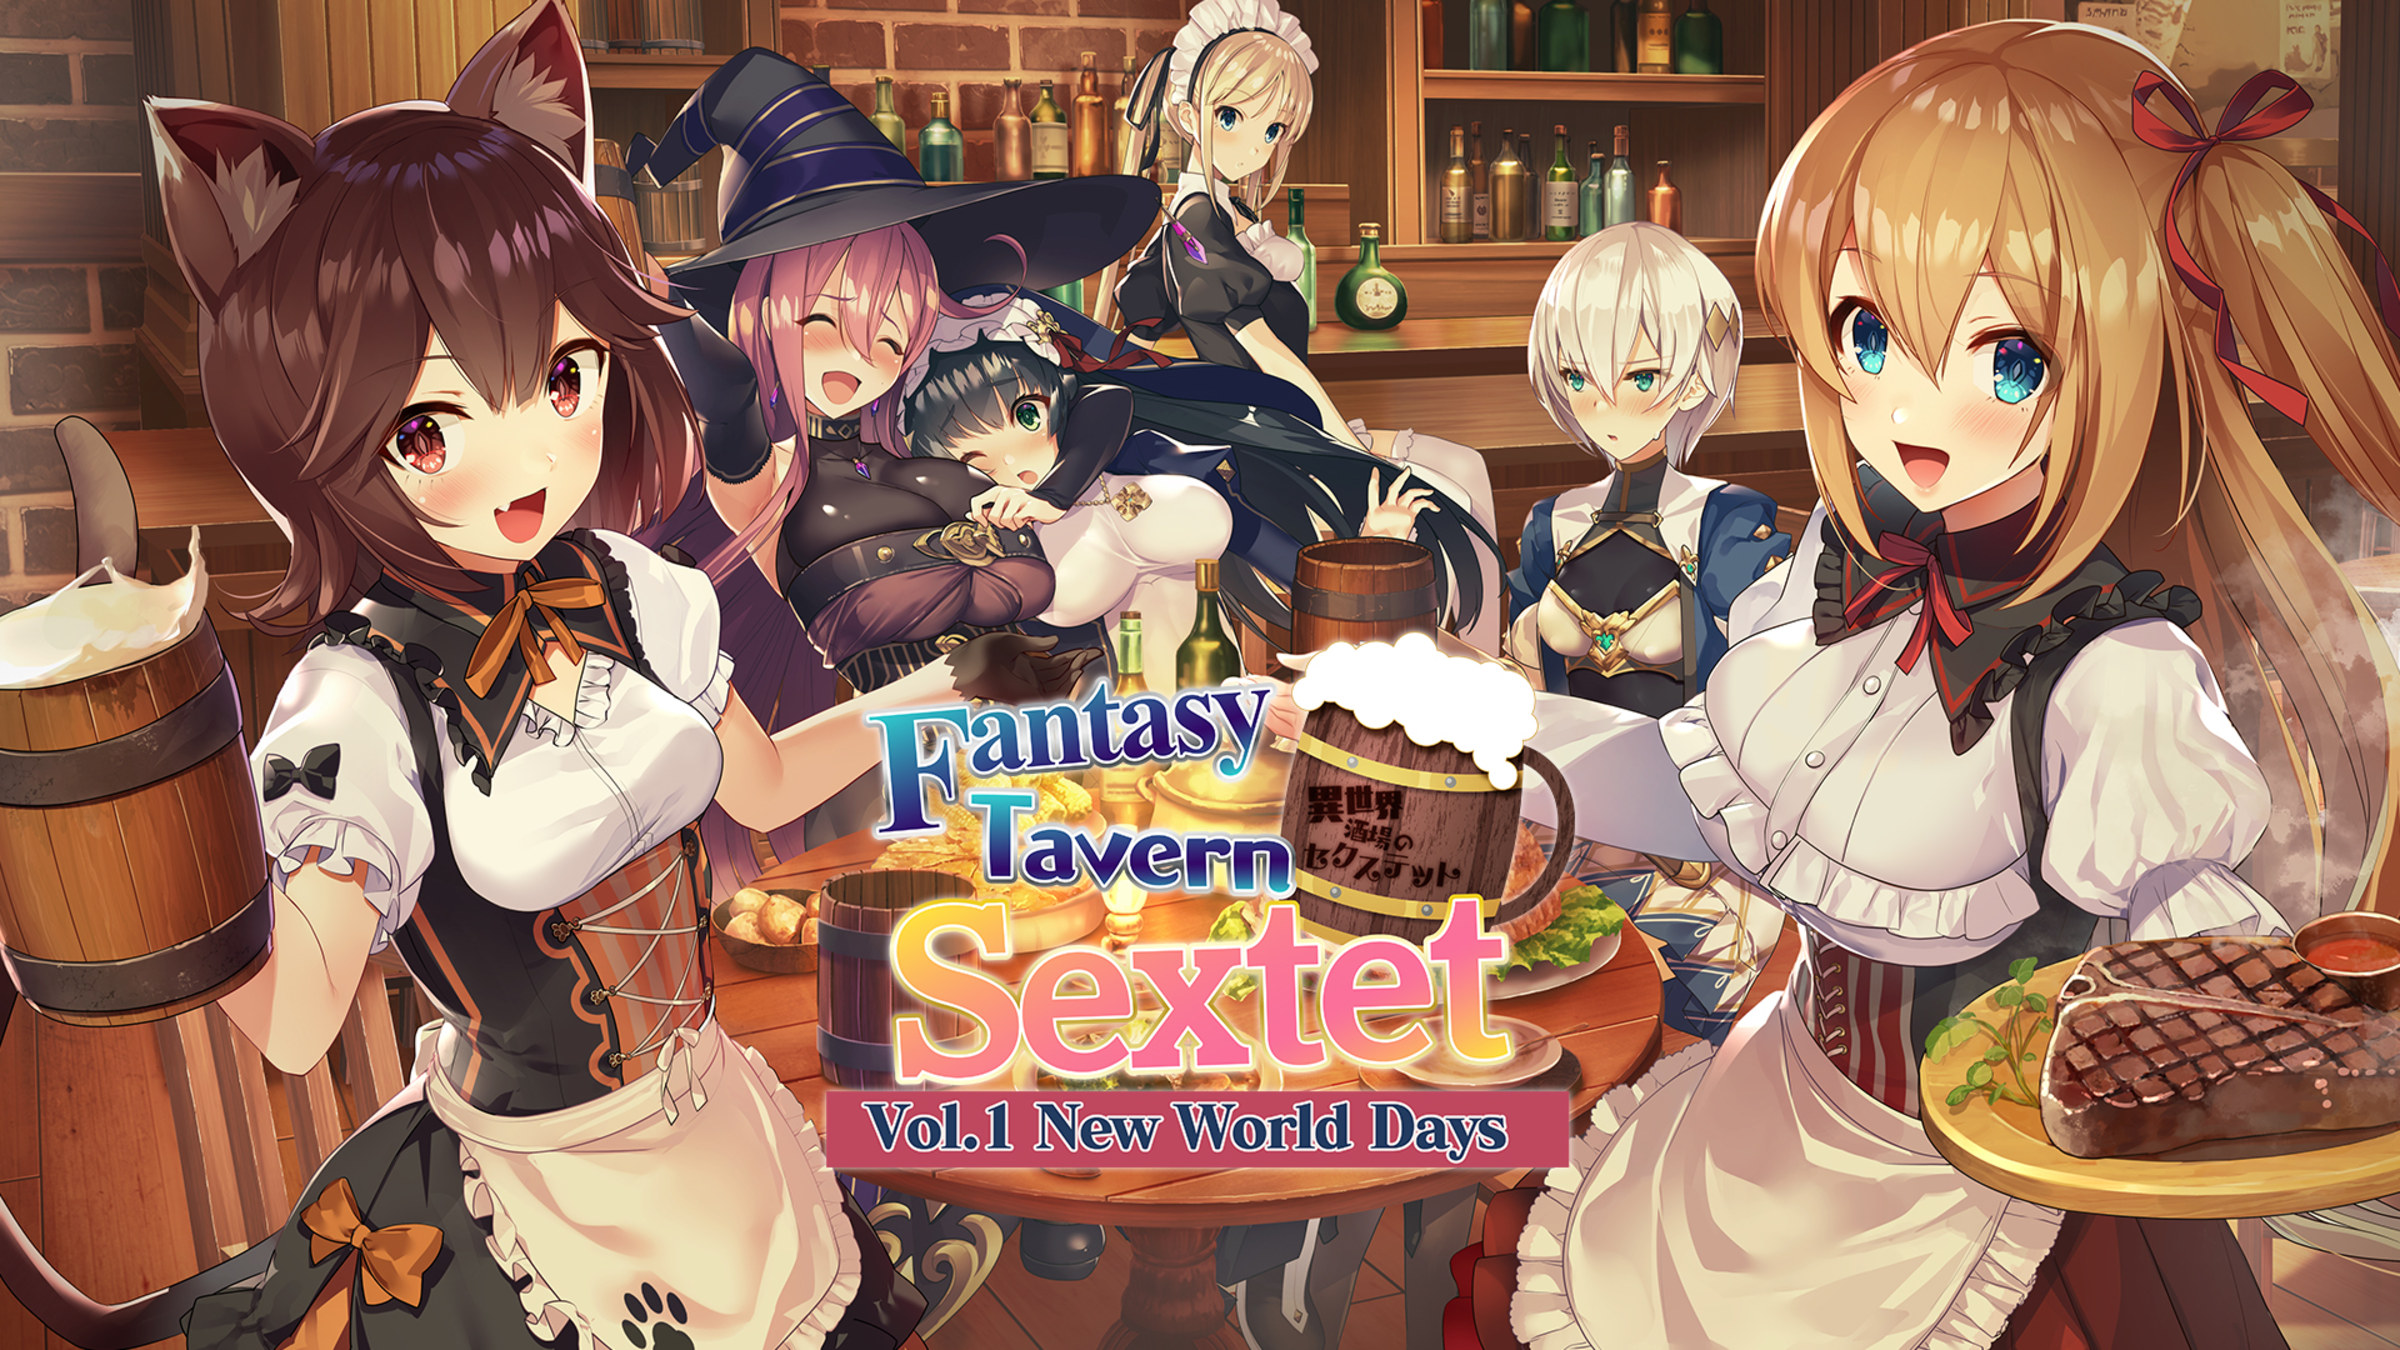 Fantasy tavern sextet